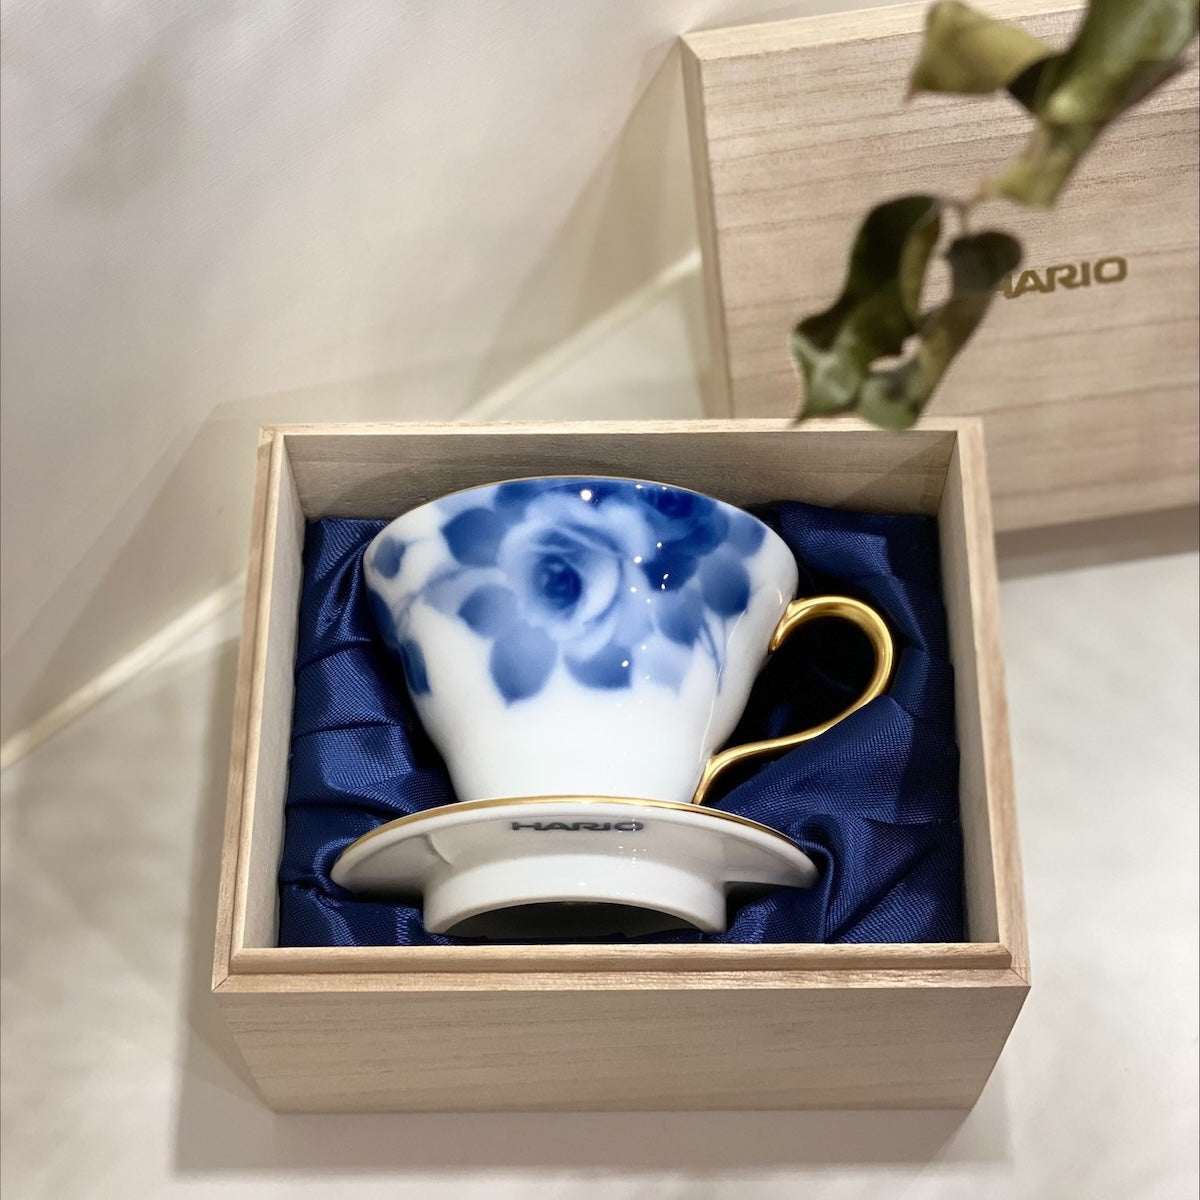 Hario x Okura Art China V60 Porcelain Dripper Lifestyle 3